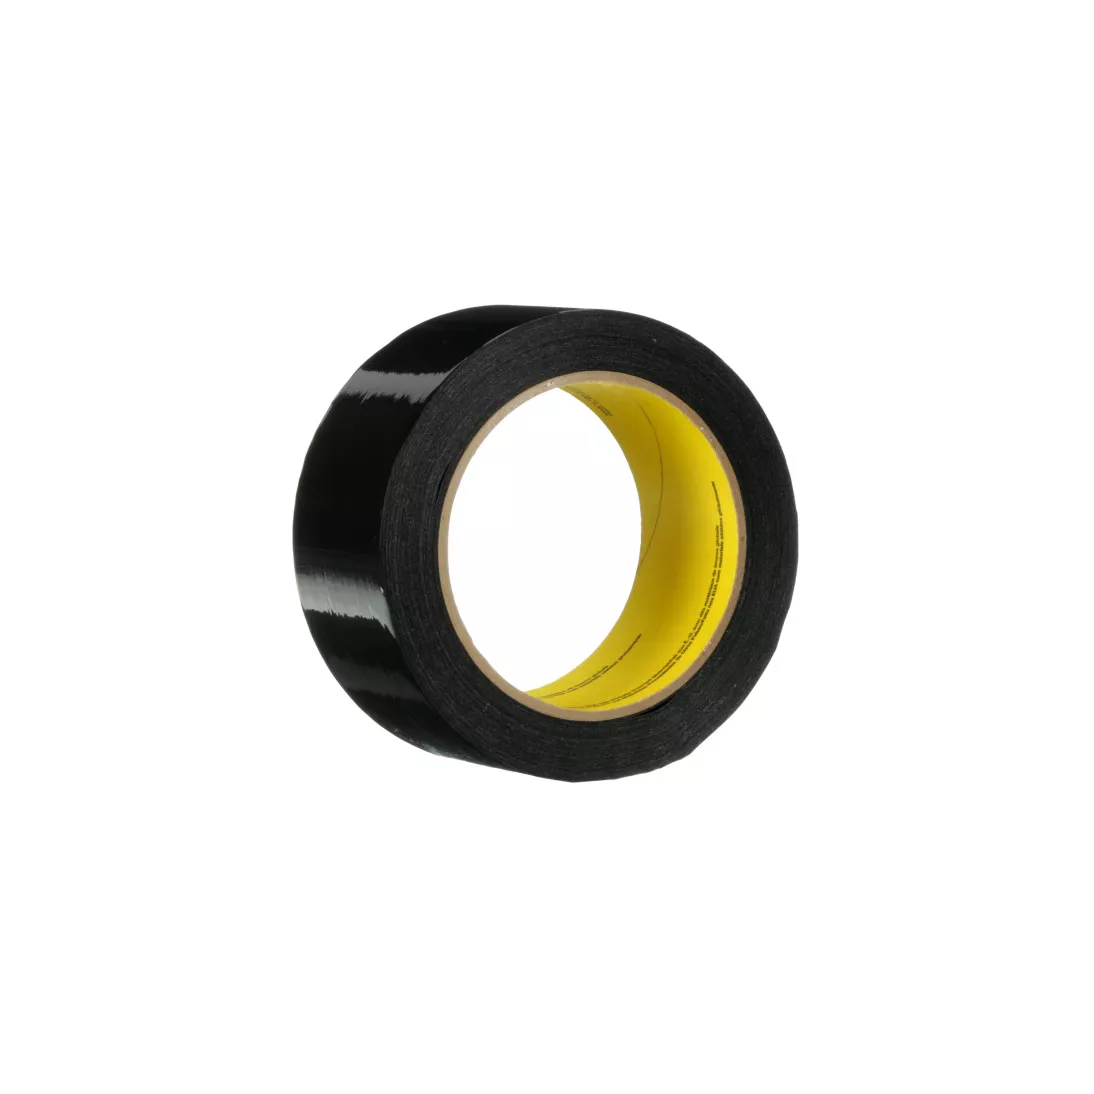 3M™ Venture Tape™ Line Set Tape 1507, Black, 48 mm x 55 m, 3 mil, 24
rolls per case